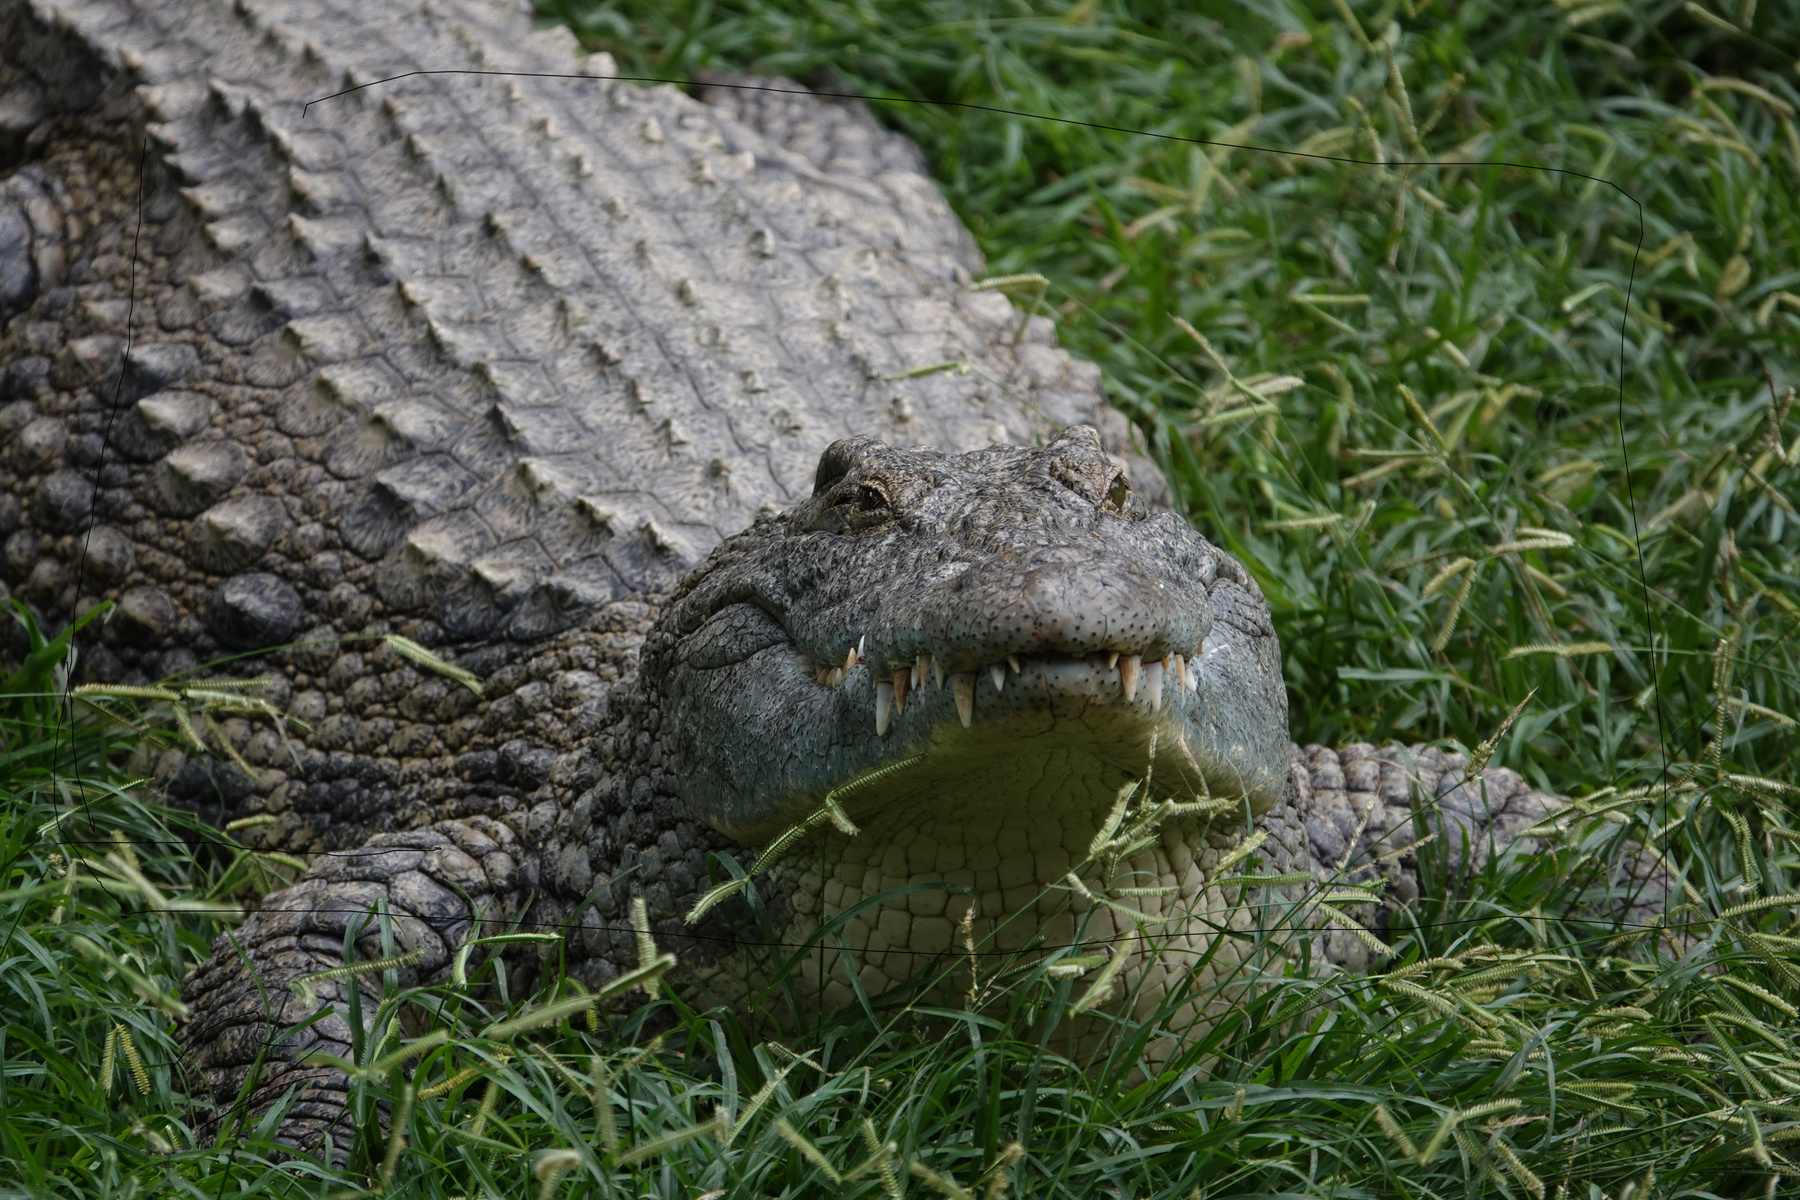 Крокодил 